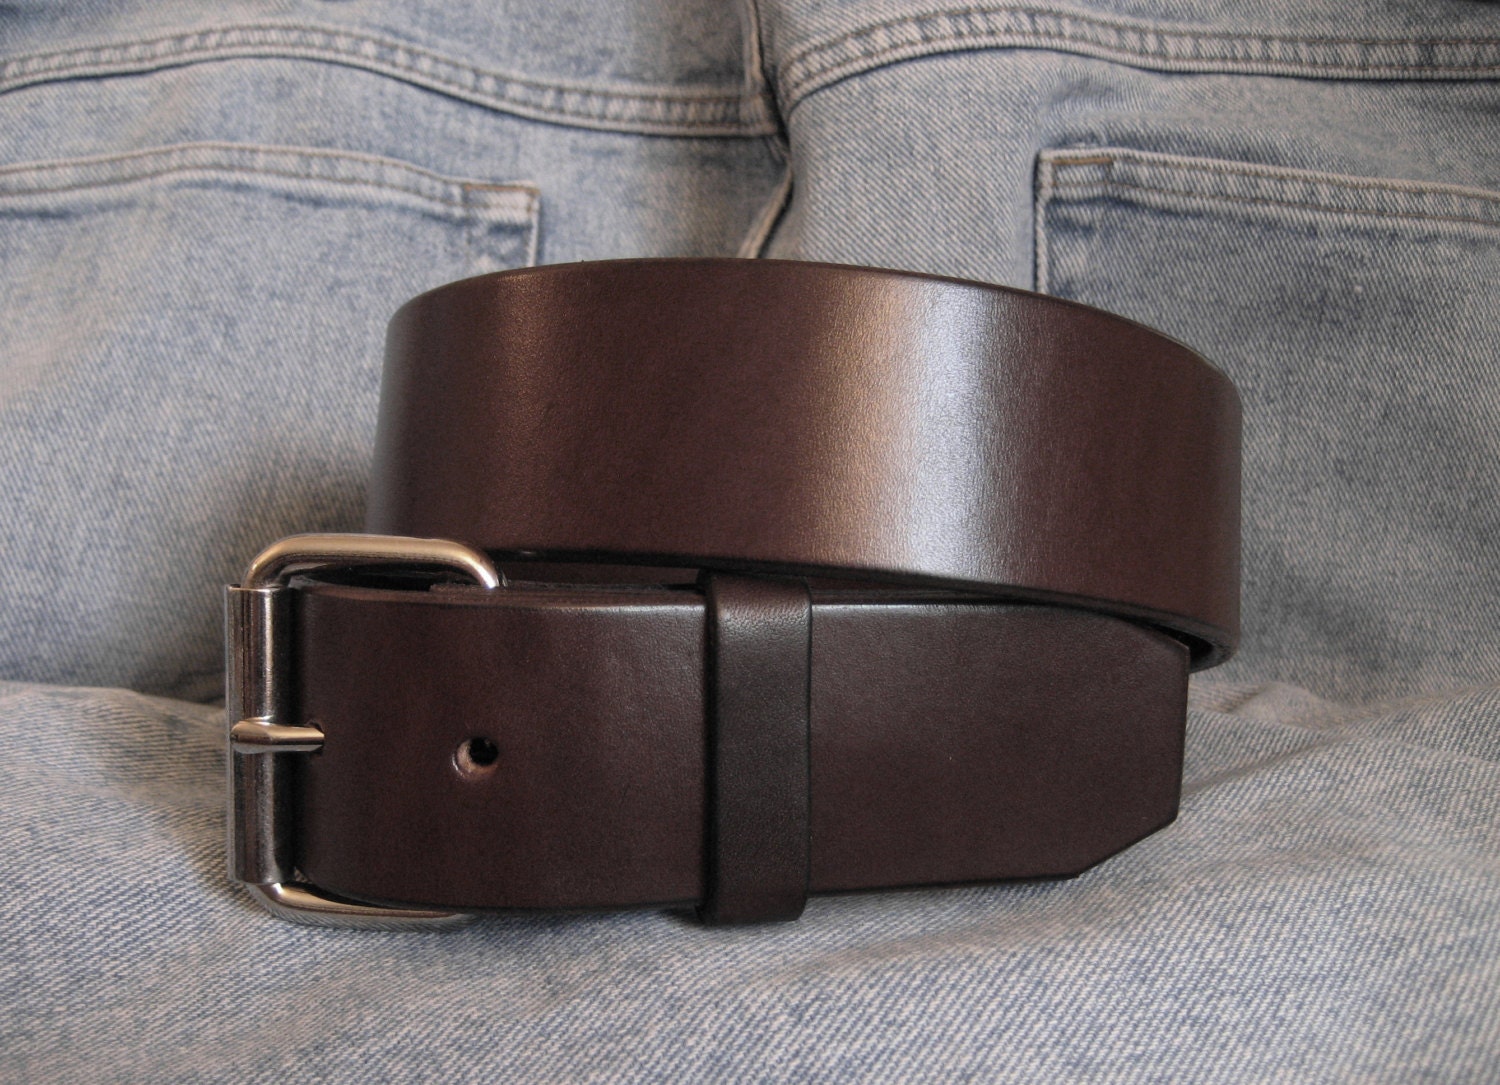 Men's Leather Belt Brown Leather Belt Leather by AngelLeatherShop